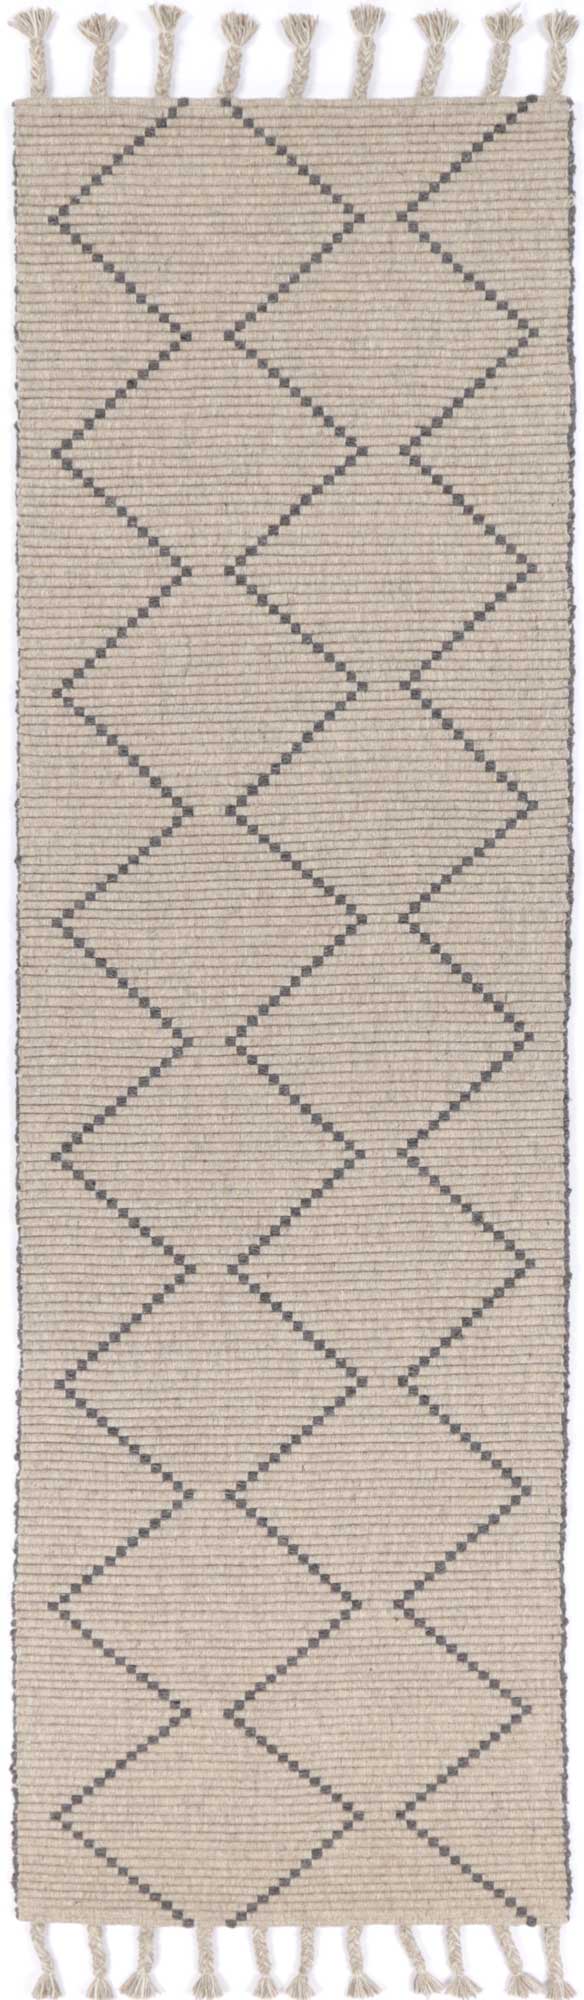 Eskandar Wool Moroccan Tasseled Taupe Rug